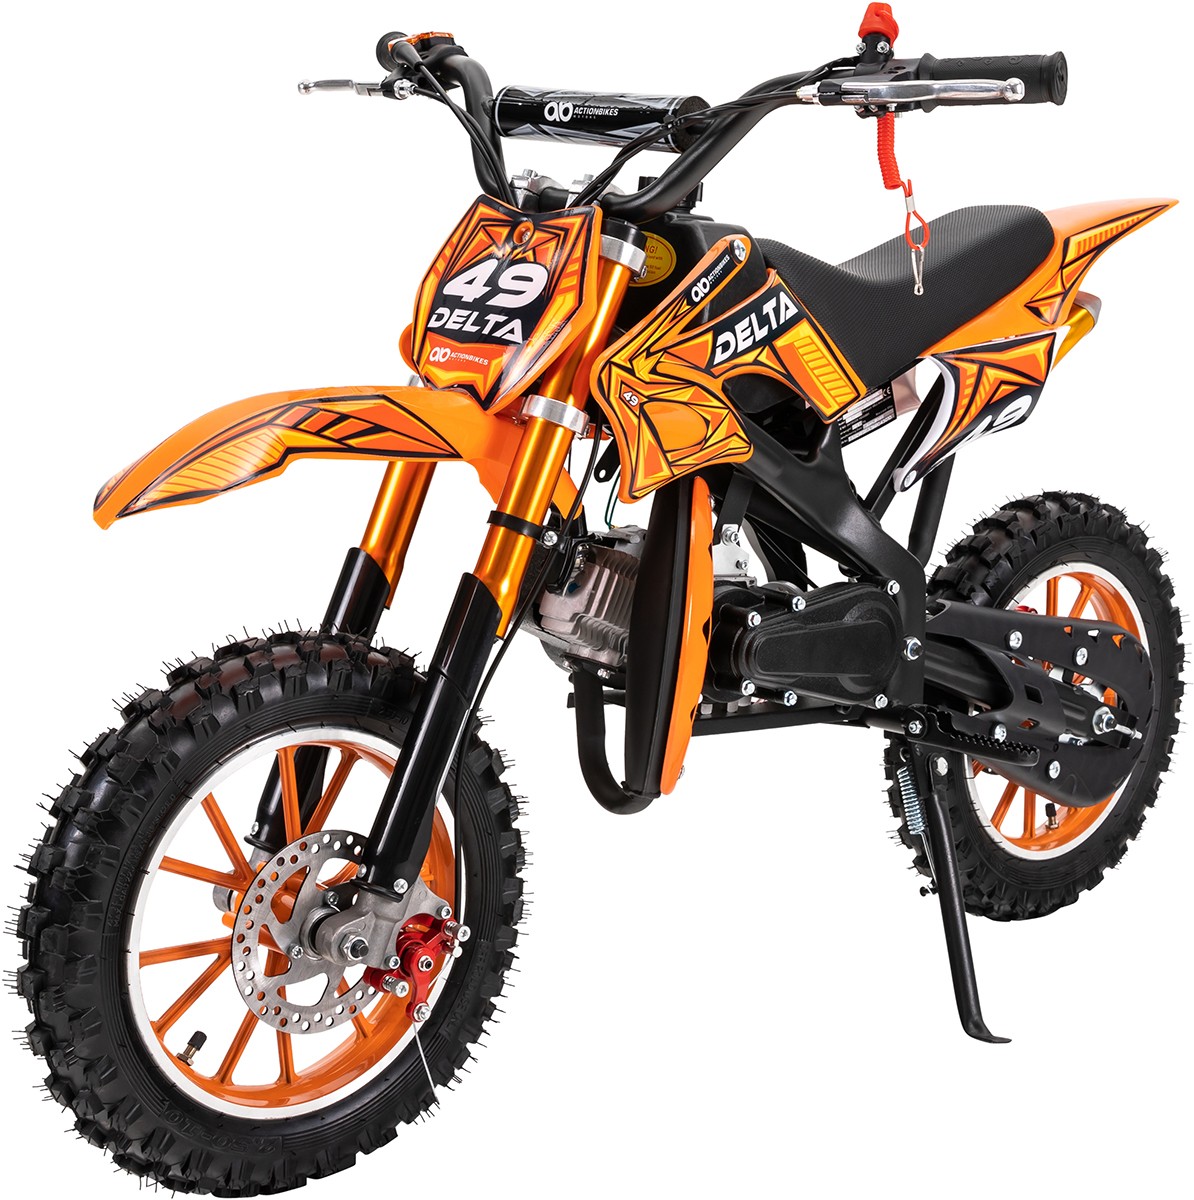 01-startbild-kinder-crossbike-orange-actionbikes-motors-delta-49cc